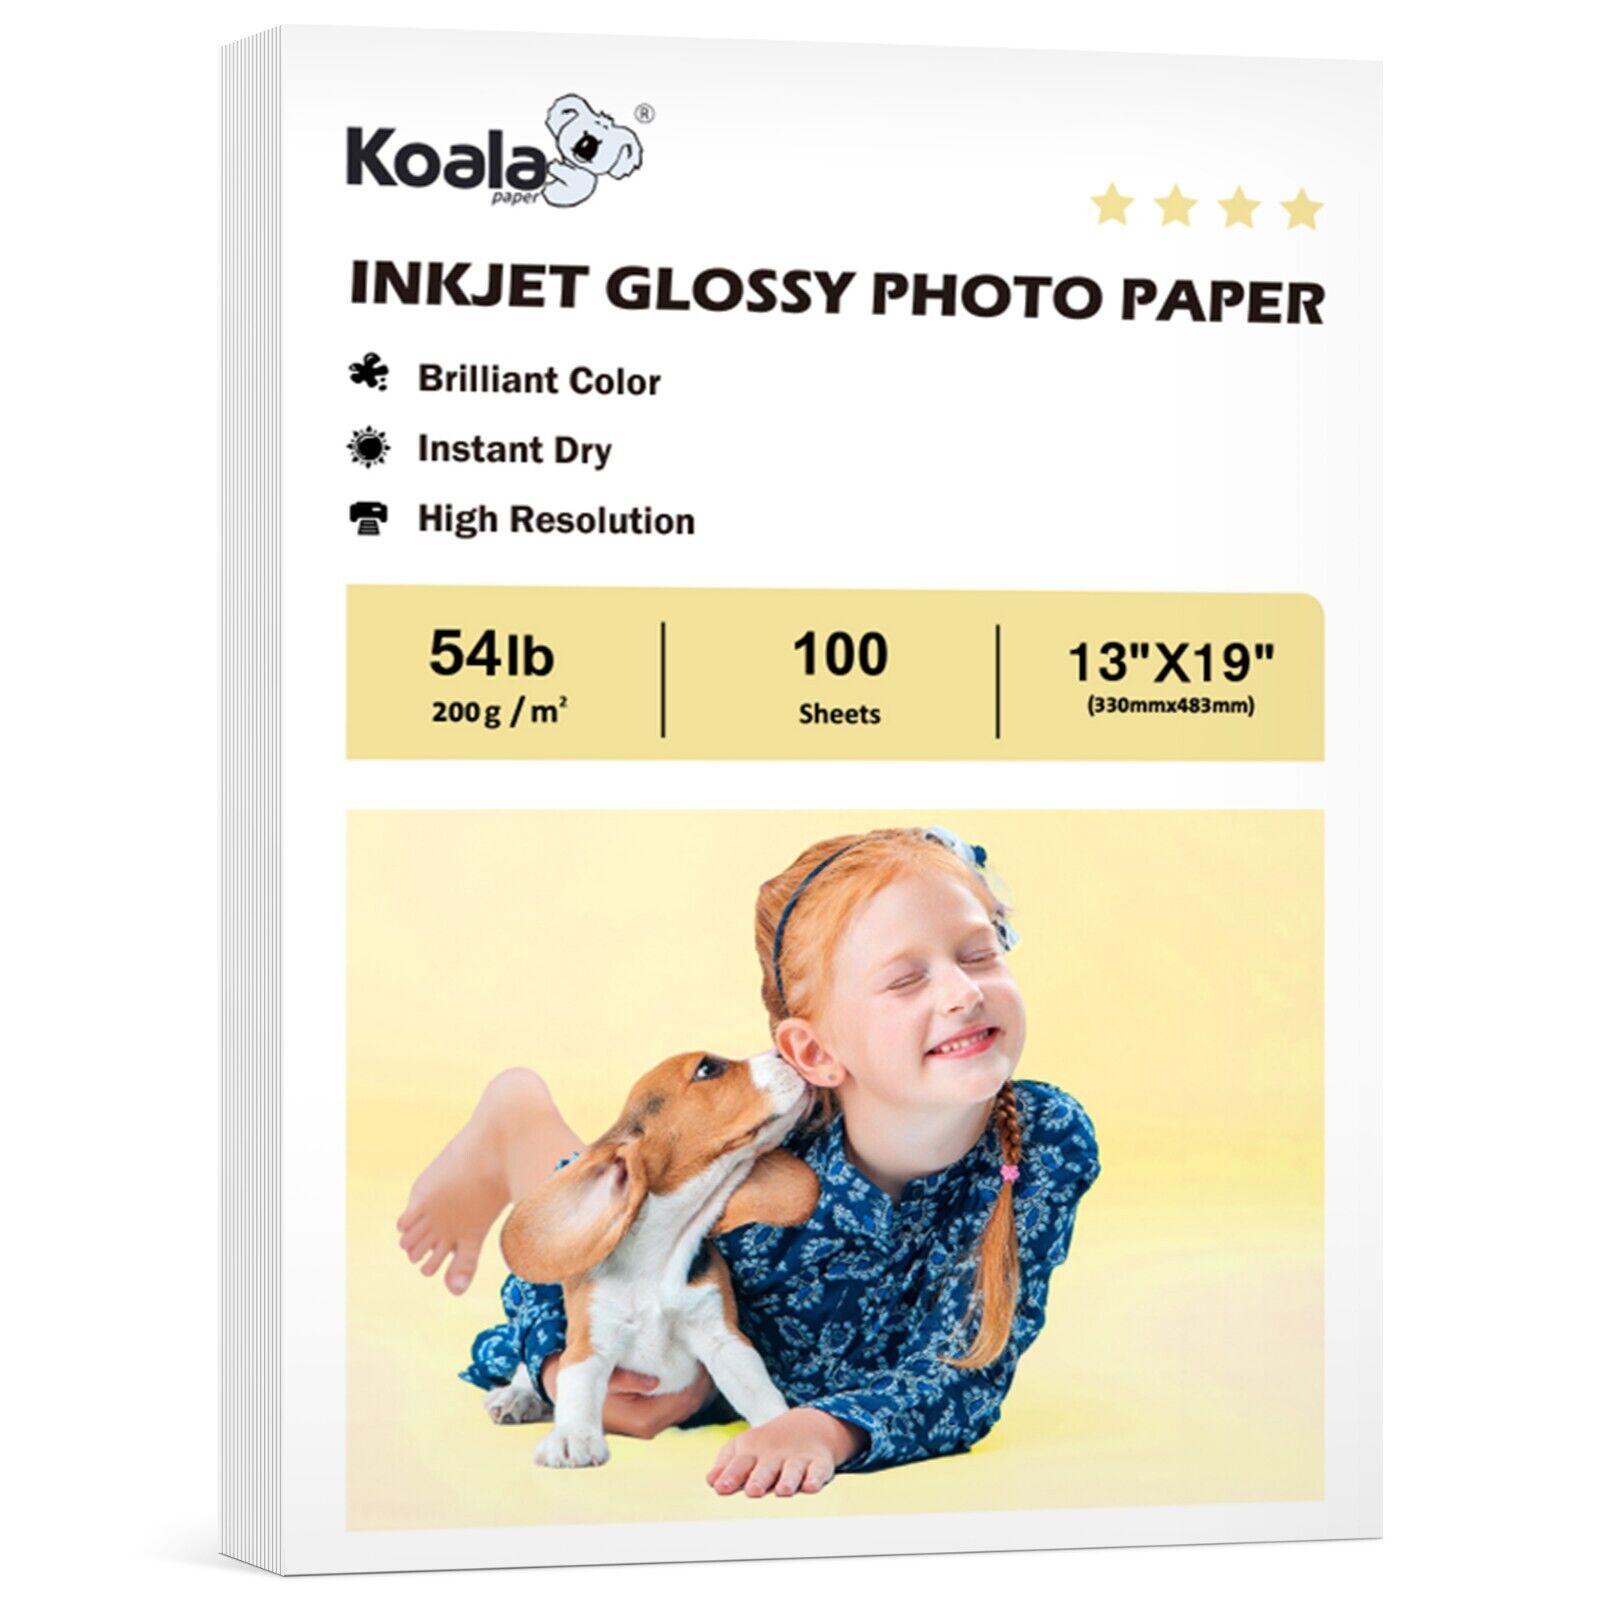 Koala Premium Glossy Photo Paper 54lb 13x19 Thick for Inkjet Printer Epson Canon